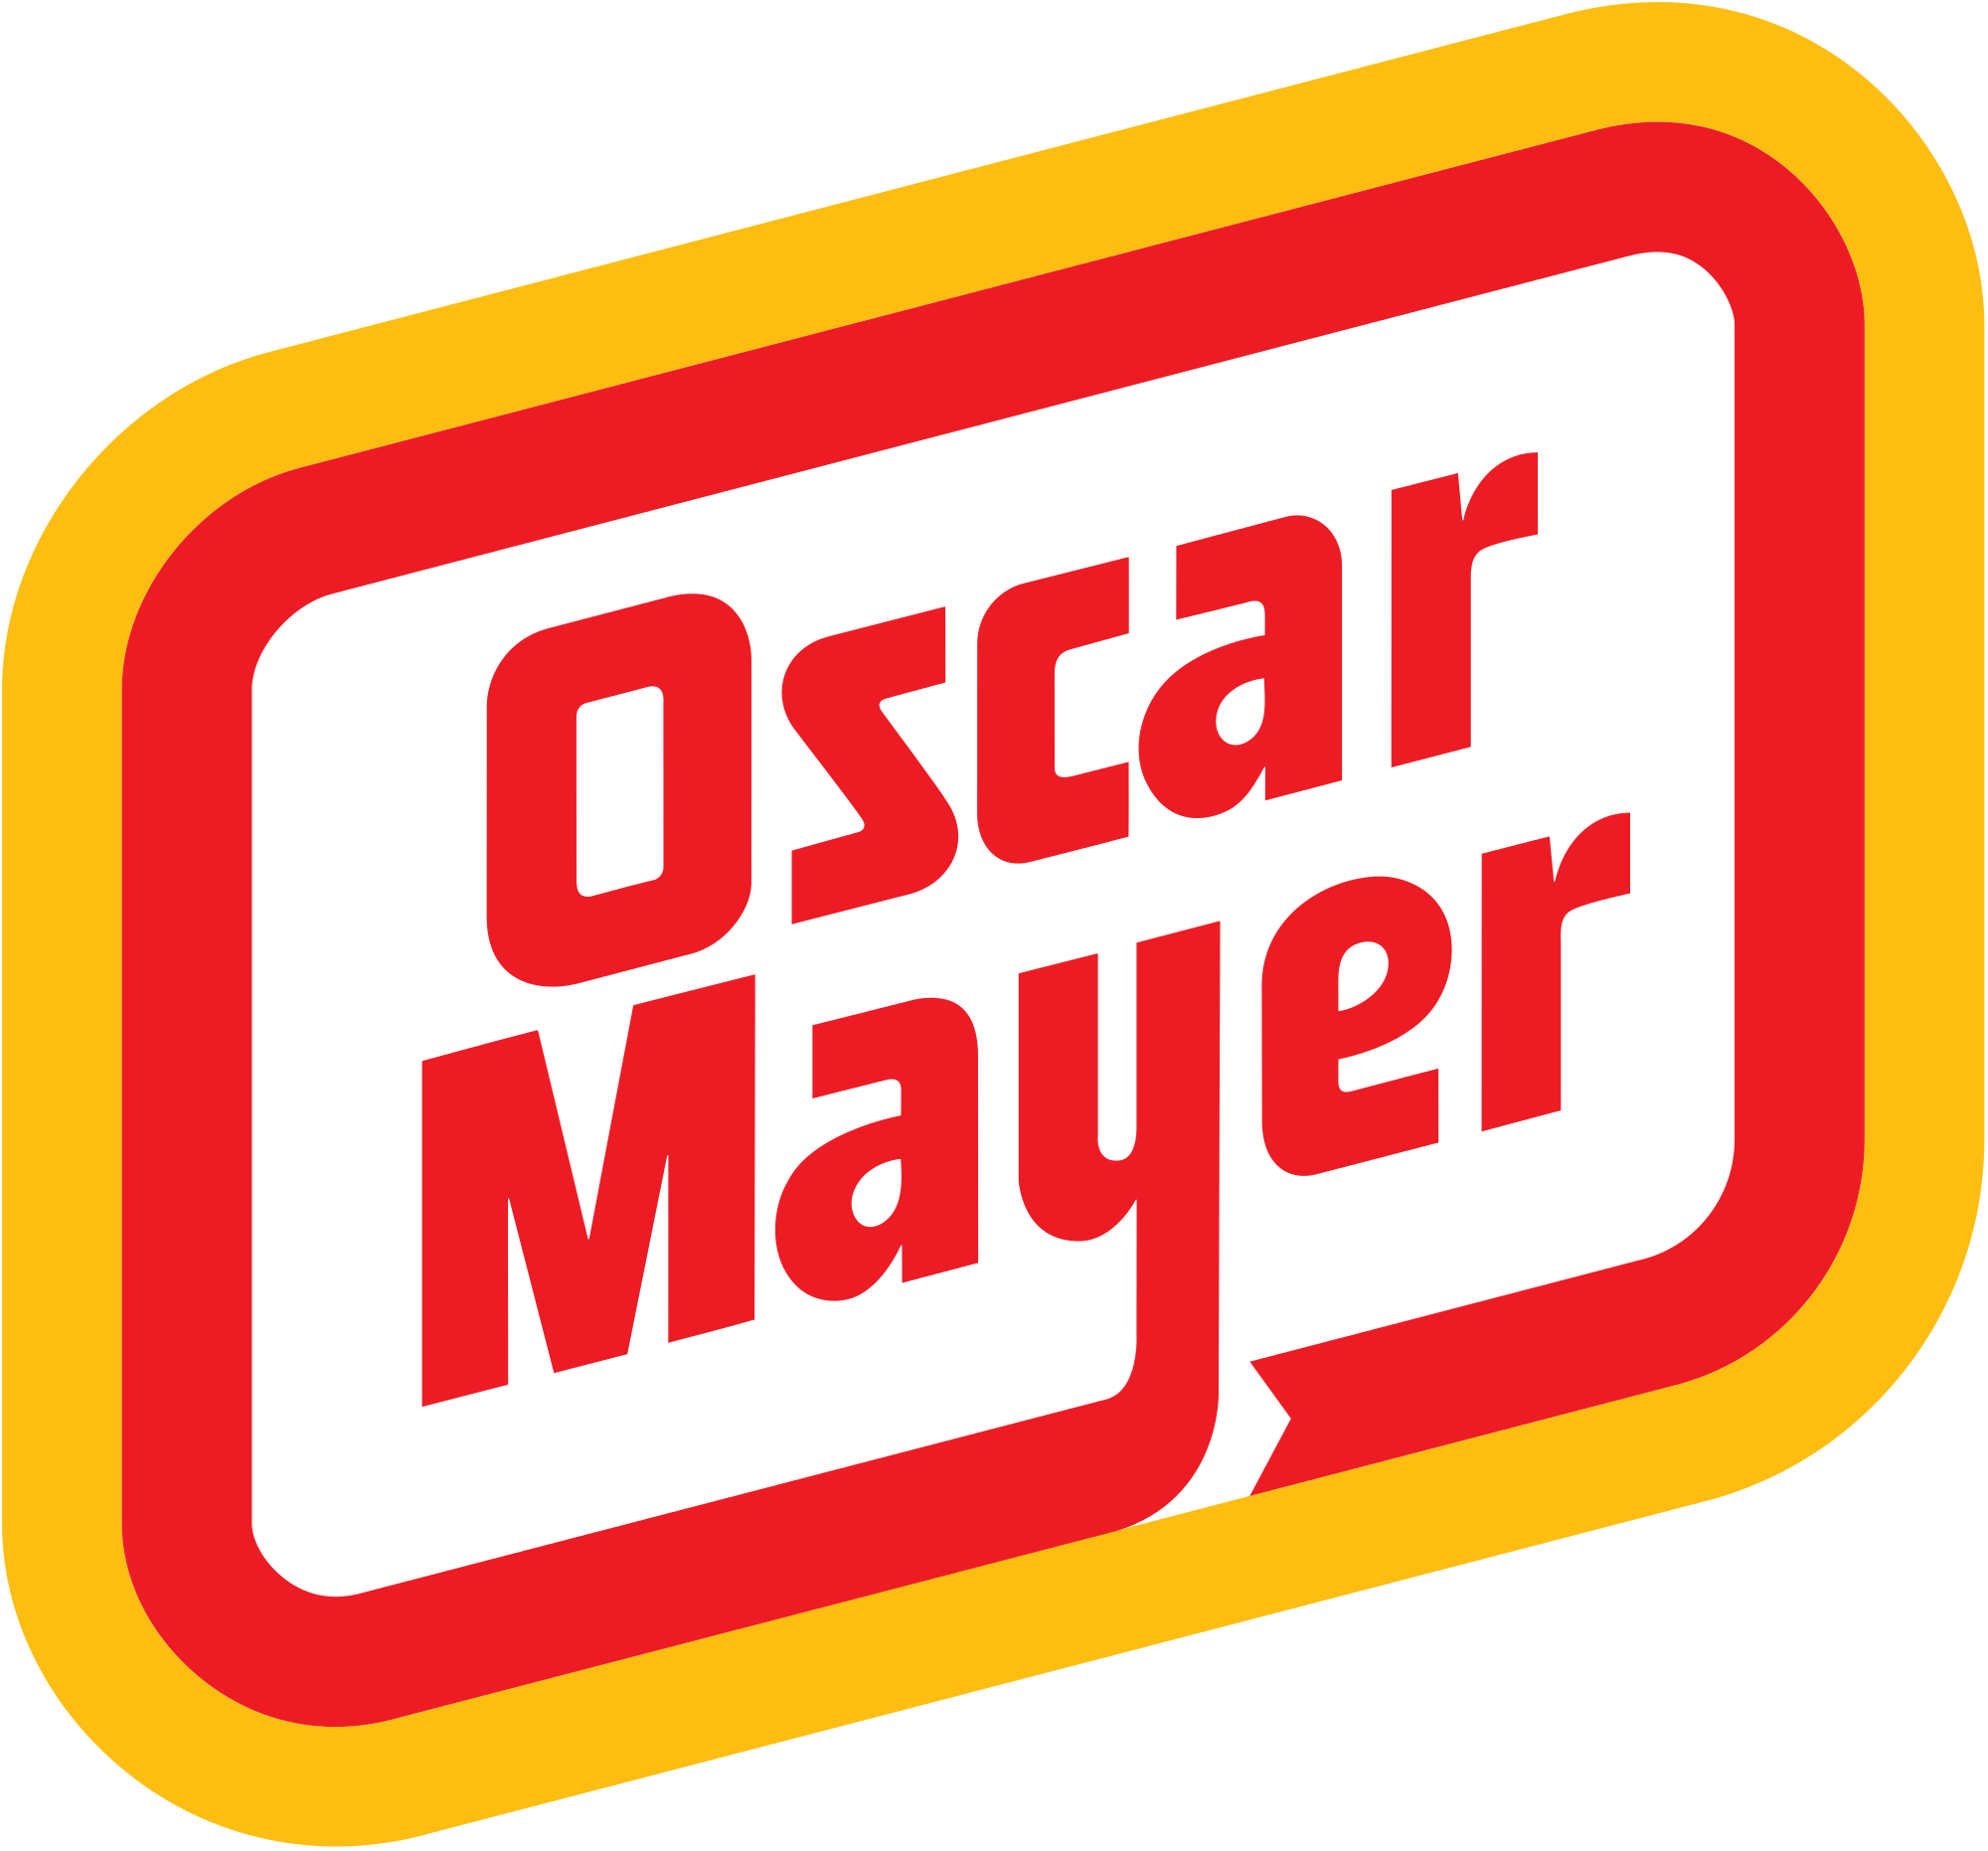 Oscar Mayer Logo - File:Oscar Mayer logo.svg - Wikimedia Commons